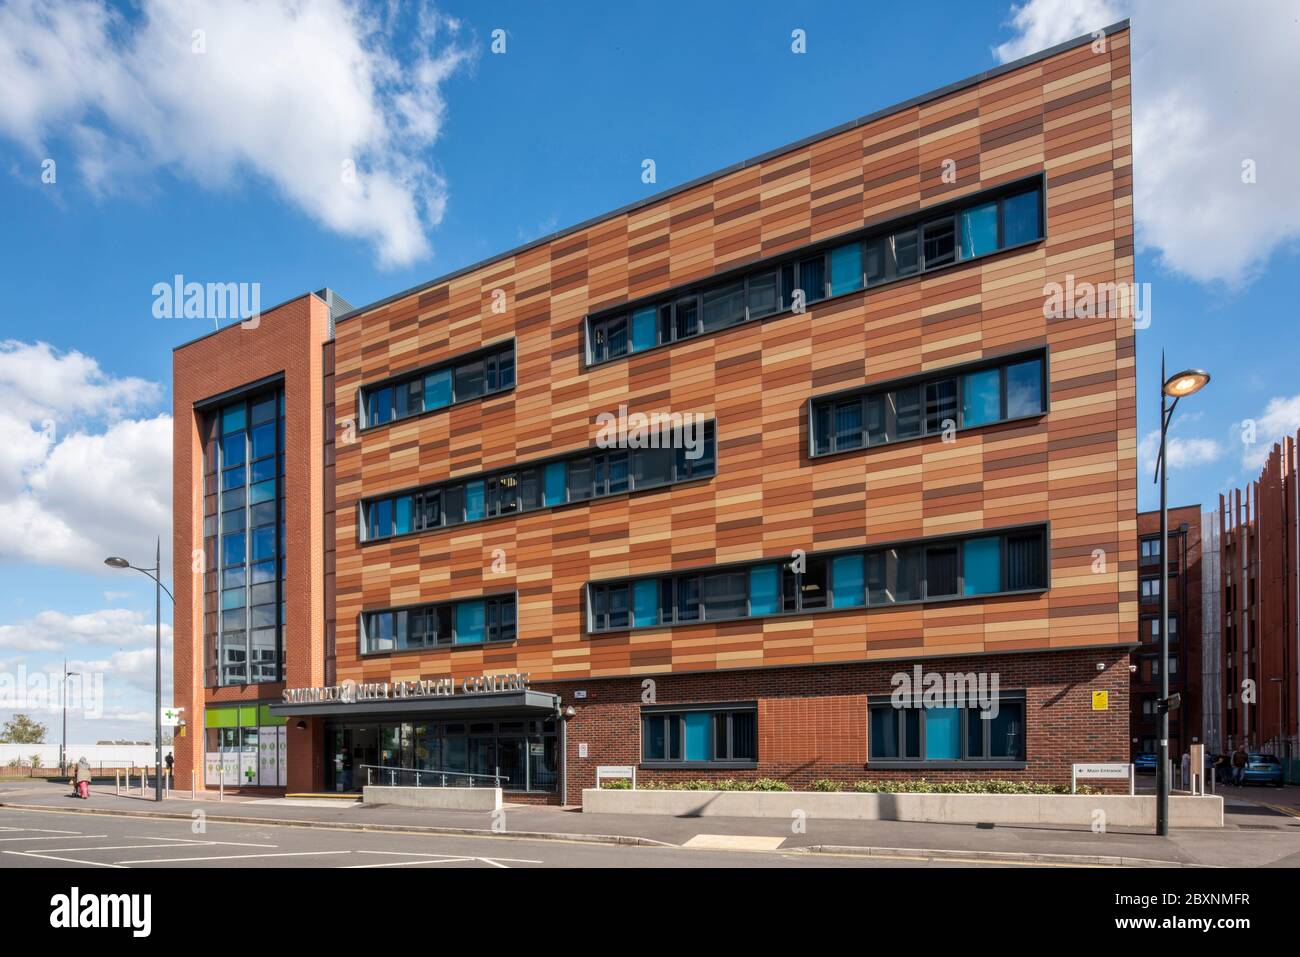 Exterior of Swindon NHS Health Centre. Swindon NHS Health Centre, Swindon, United Kingdom. Architect: Roberts Limbrick Ltd, 2017. Stock Photo